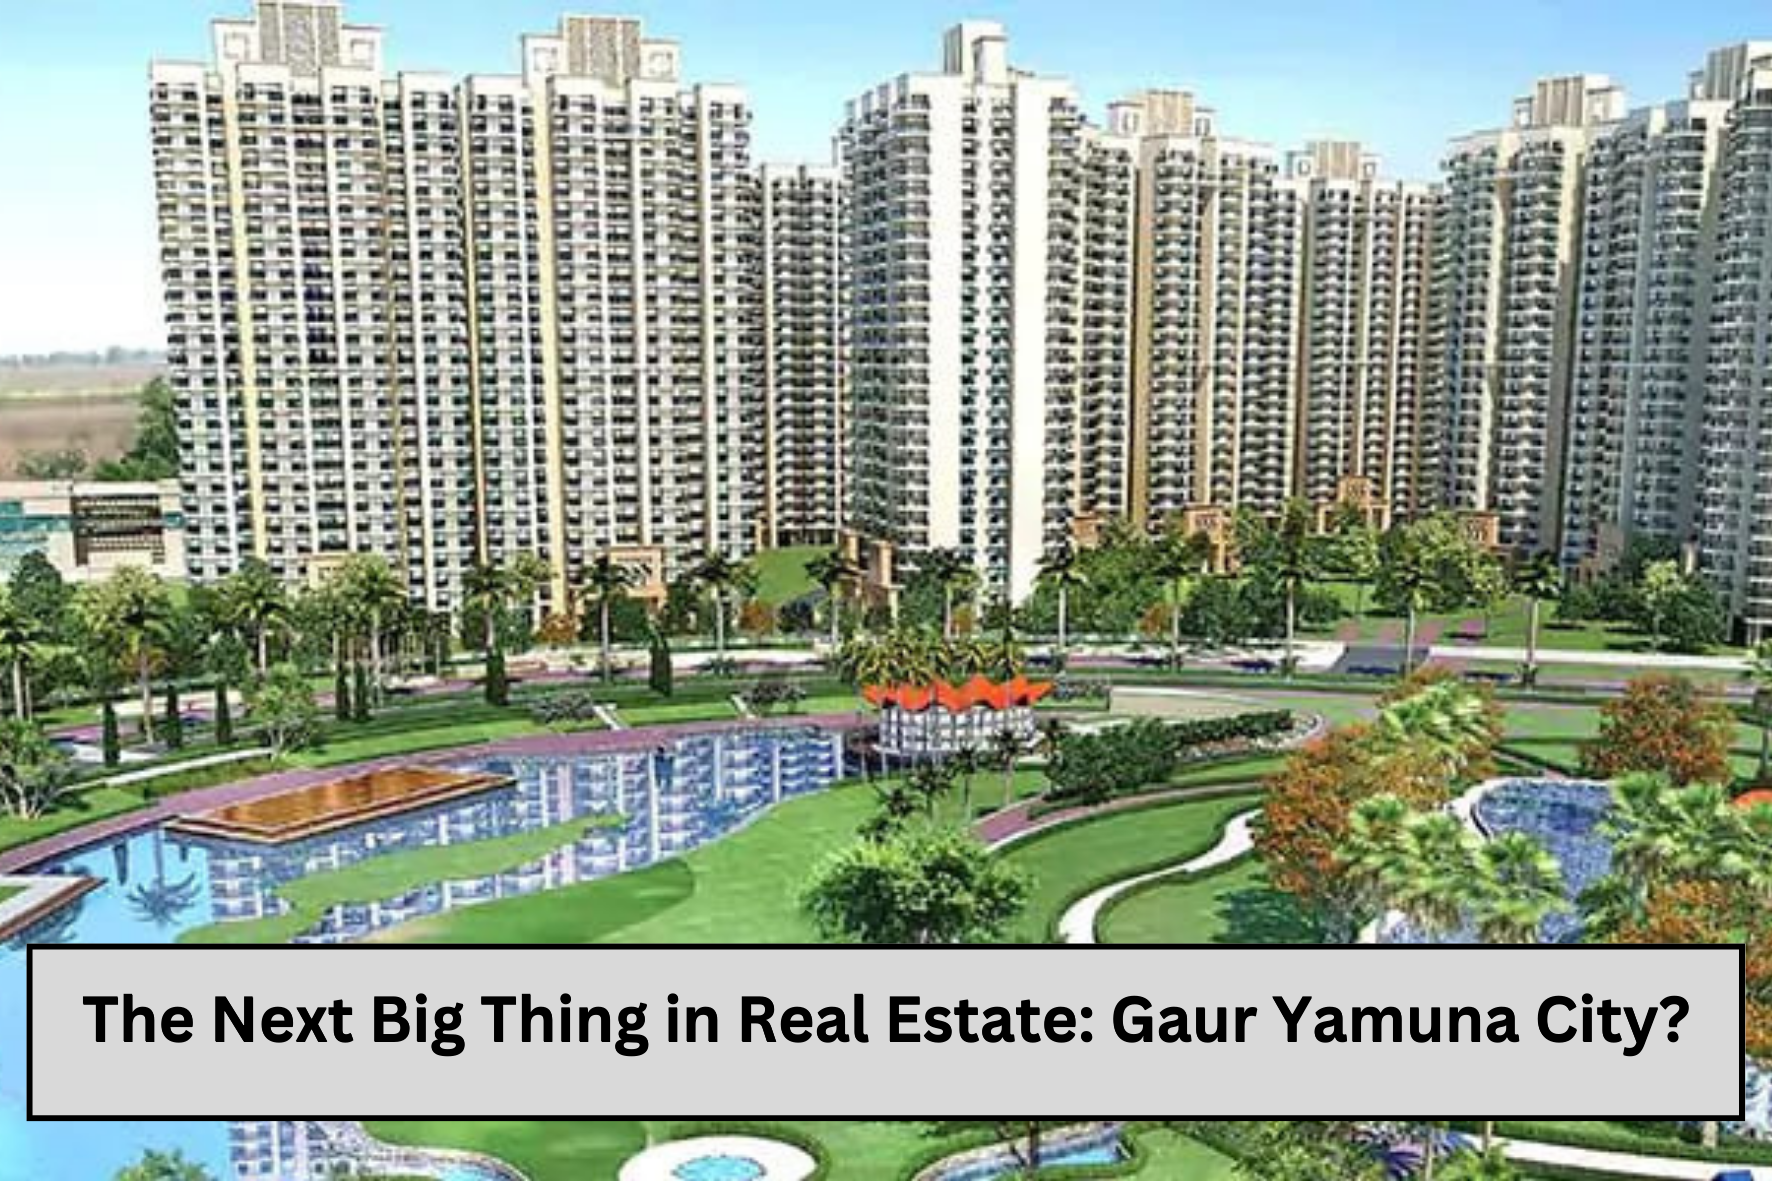 uploads/blog/The_Next_Big_Thing_in_Real_Estate_Gaur_Yamuna_City.png